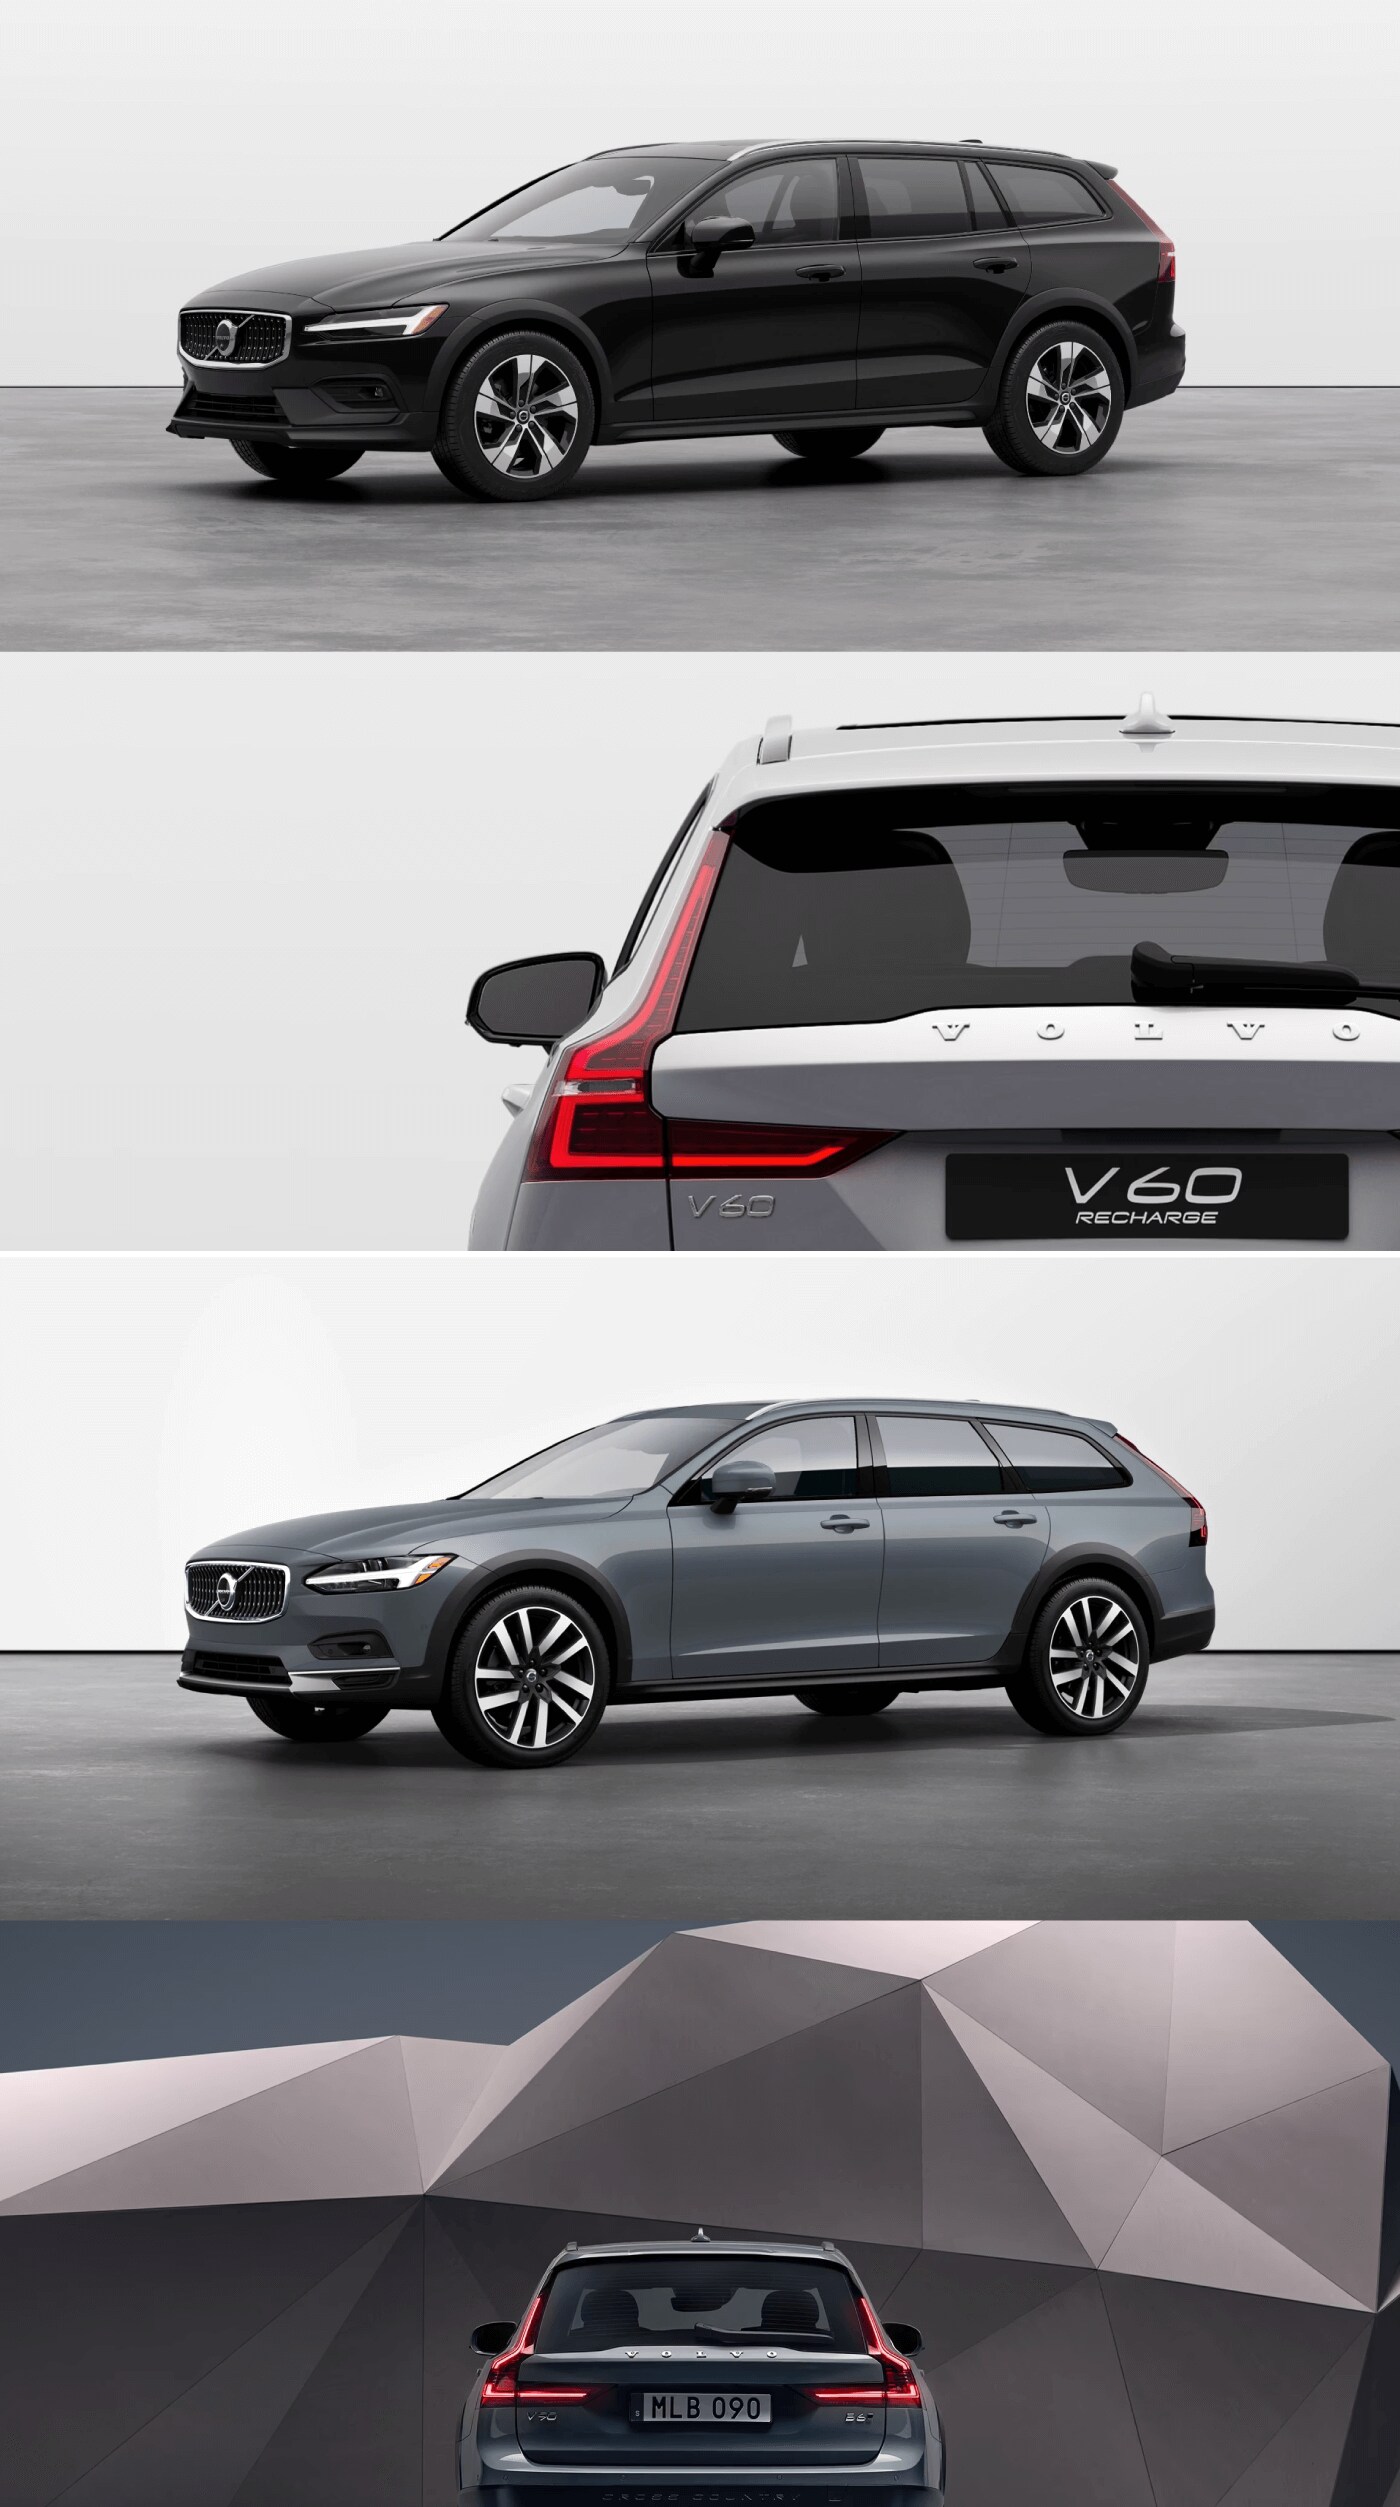 Volvo V60 vs. Volvo V90: Trim Levels